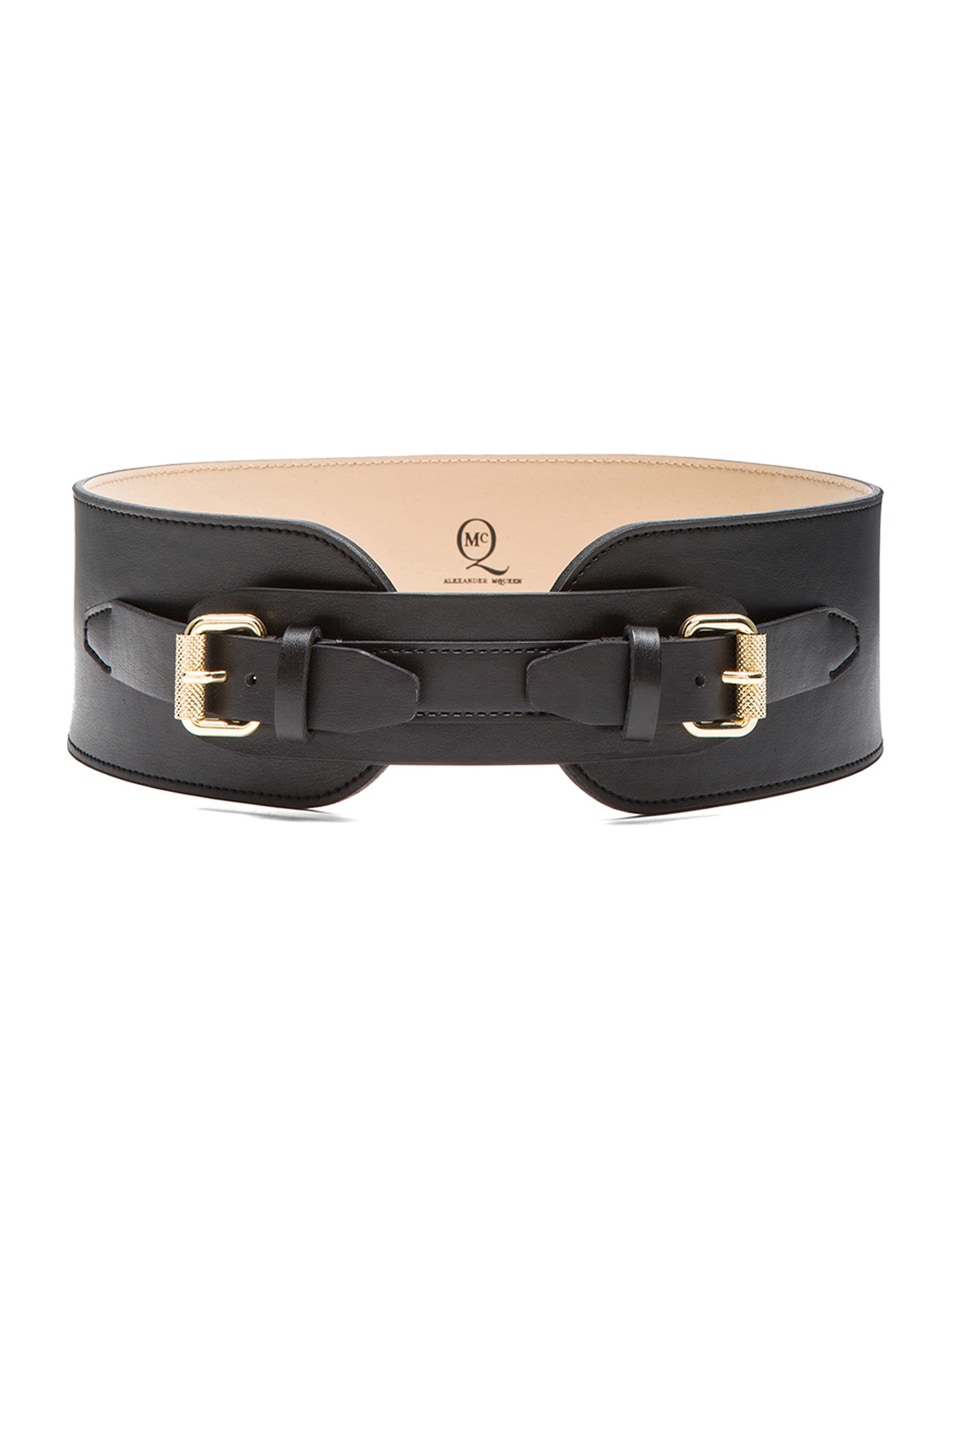 McQ Alexander McQueen Cinch Belt in Black | FWRD